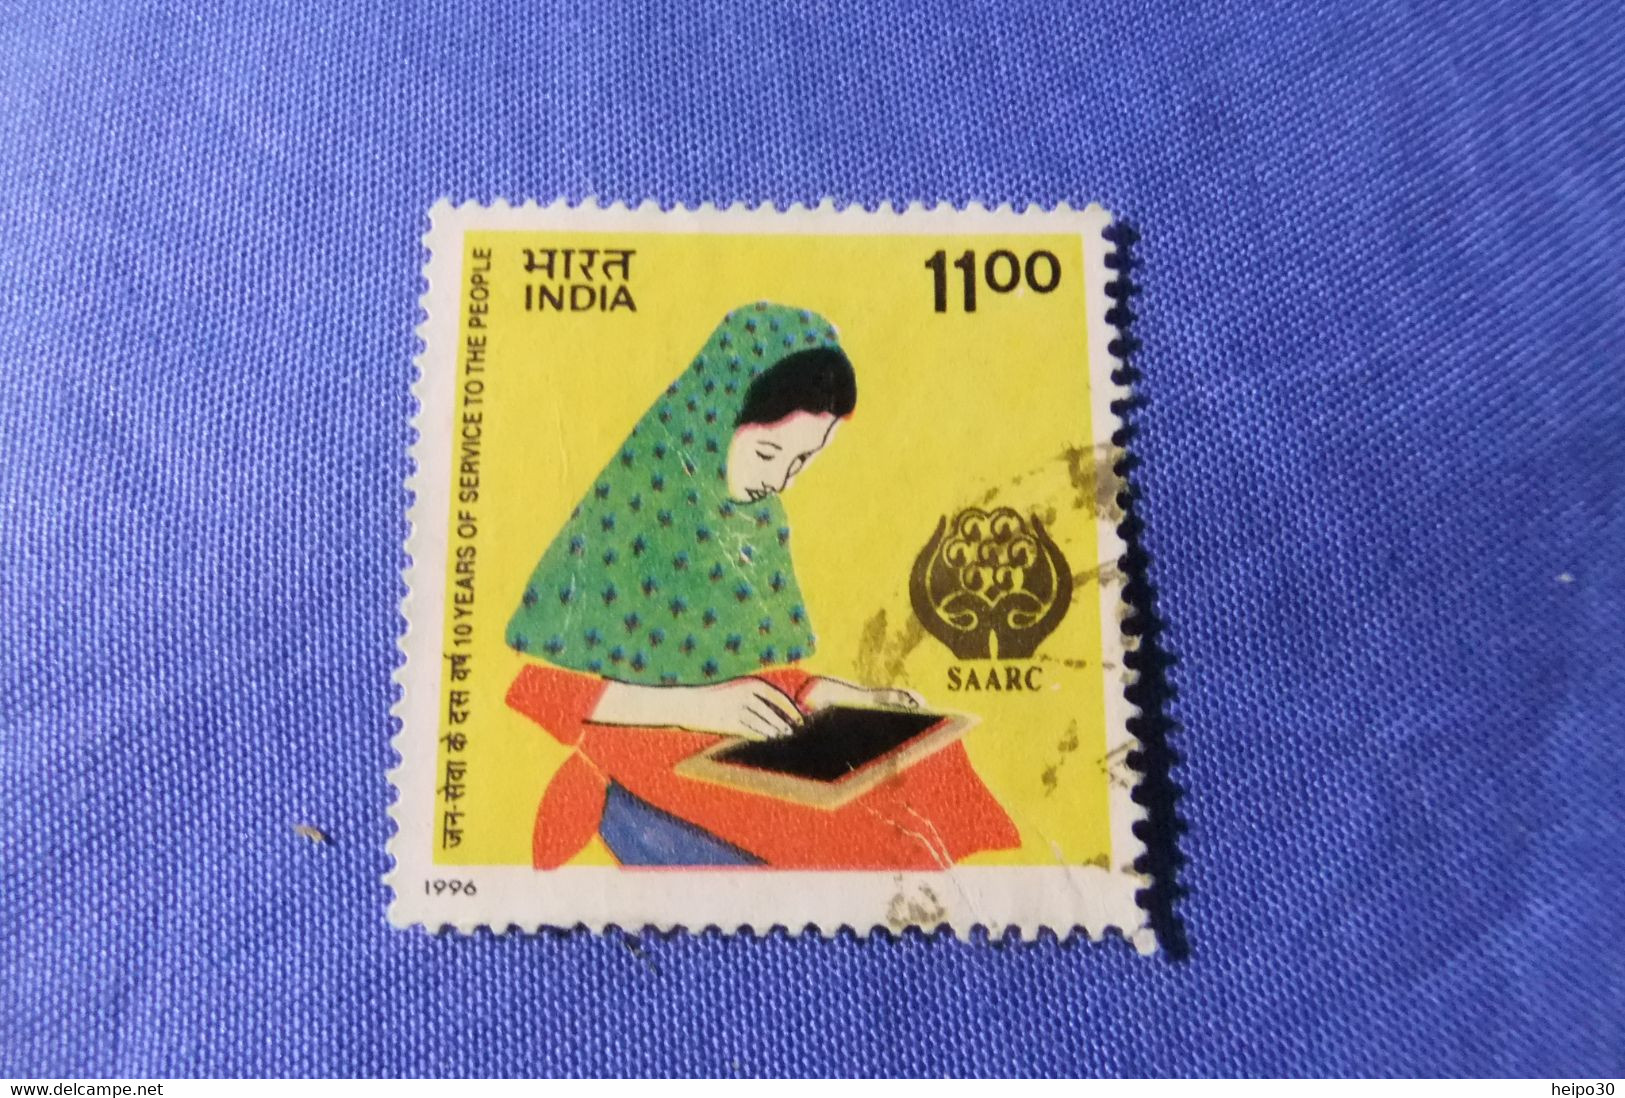 India 1996 Michel 1526 SAARC - Used Stamps